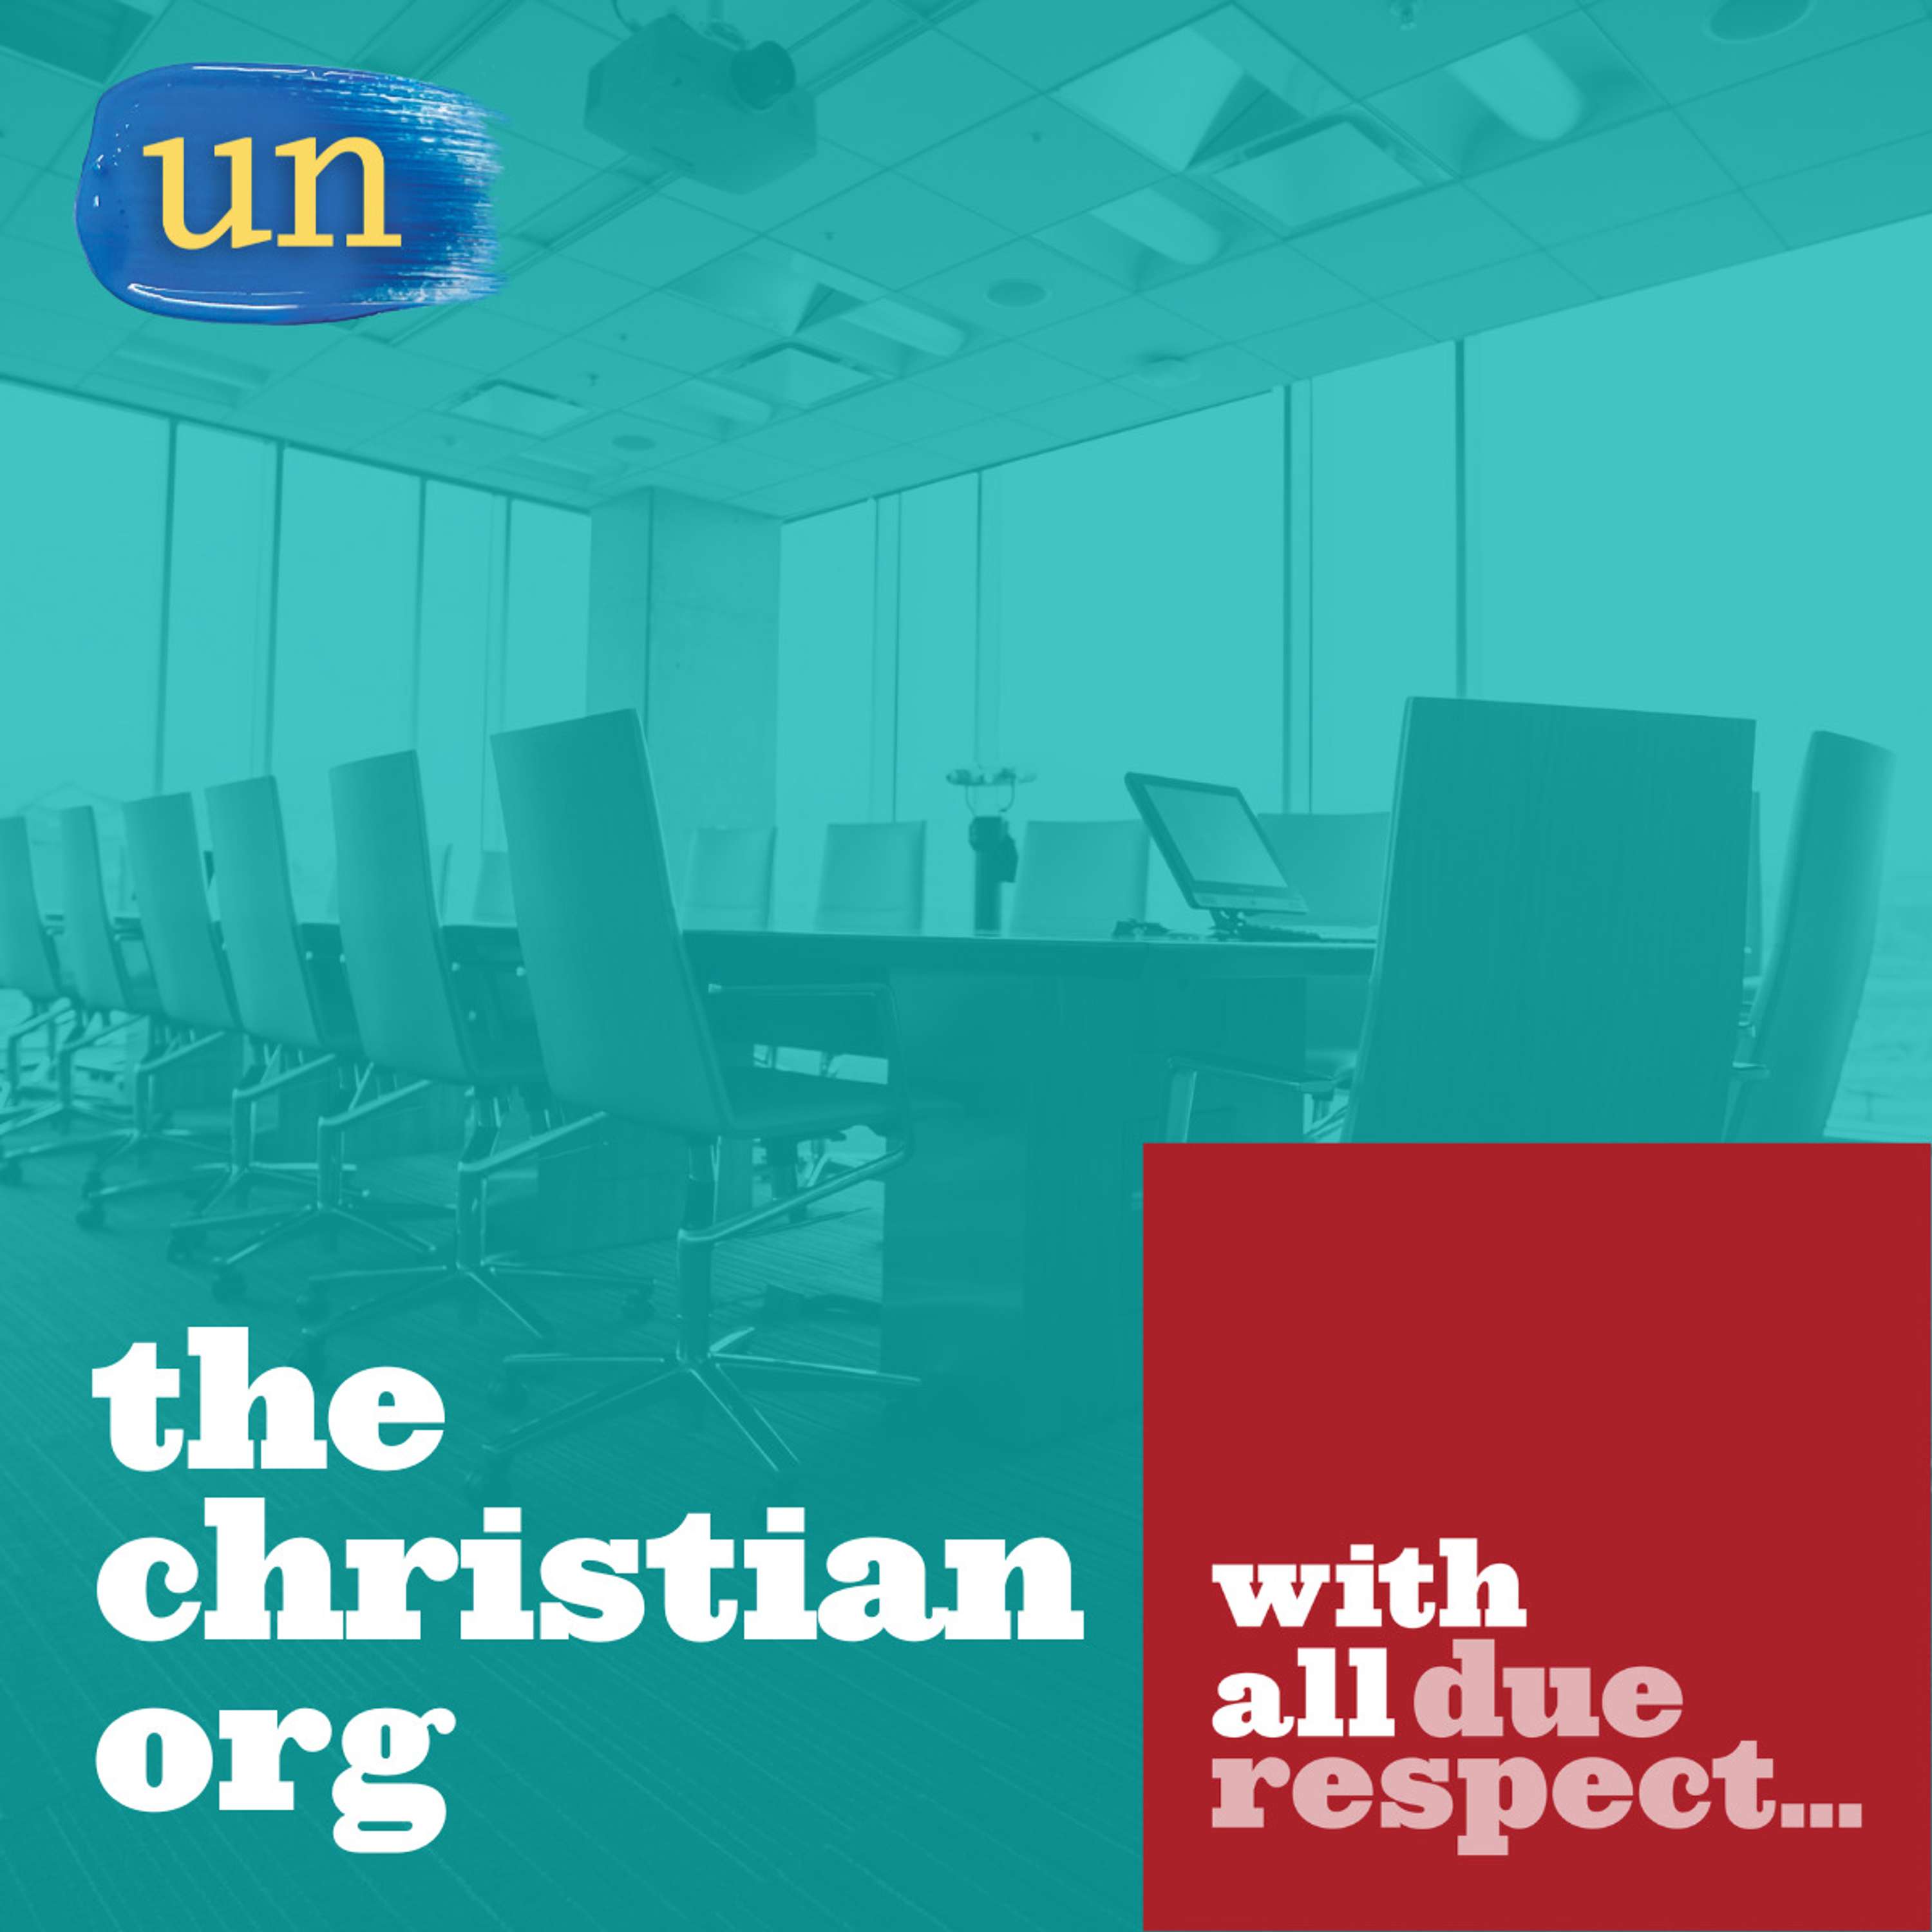 The Christian Org